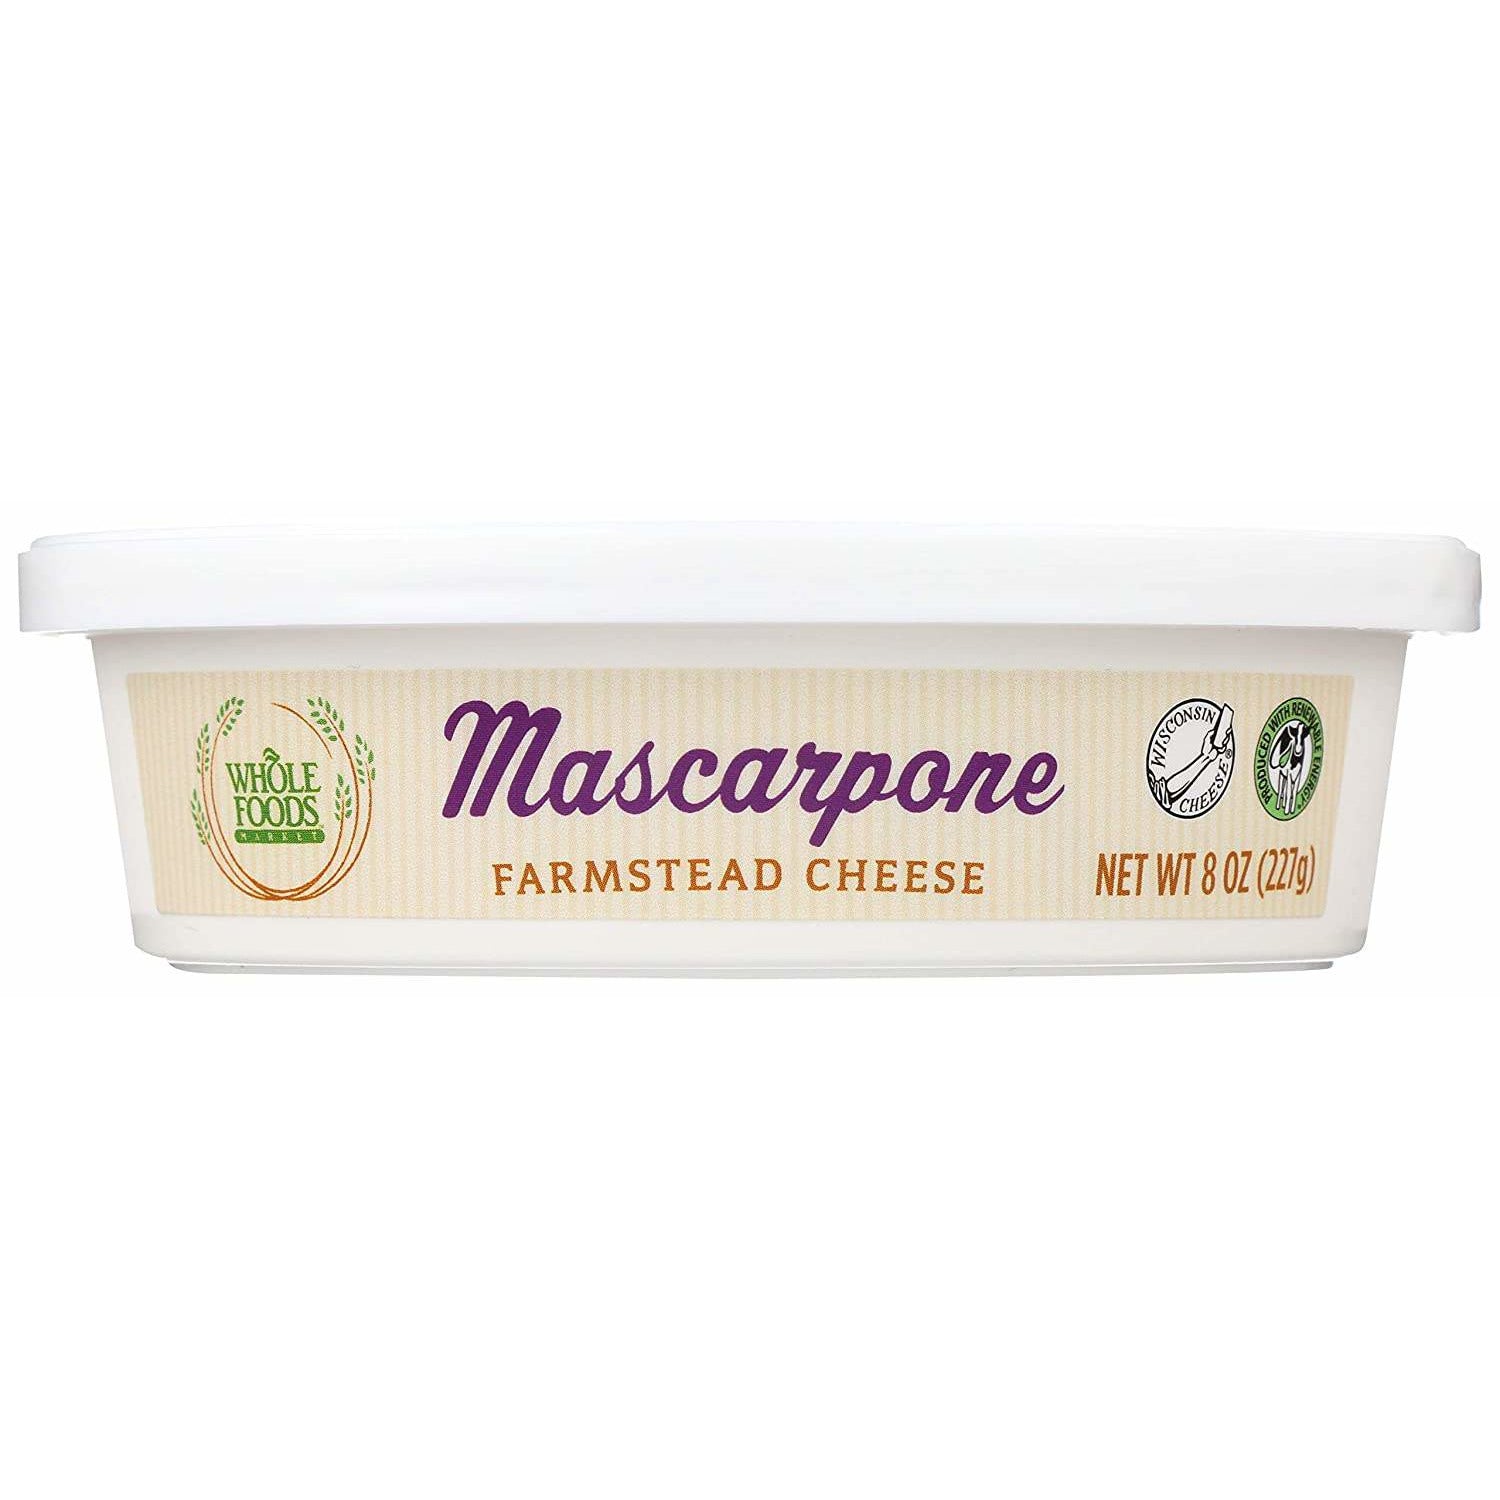 Whole Foods Market, Mascarpone, Farmstead Cheese, 8 oz